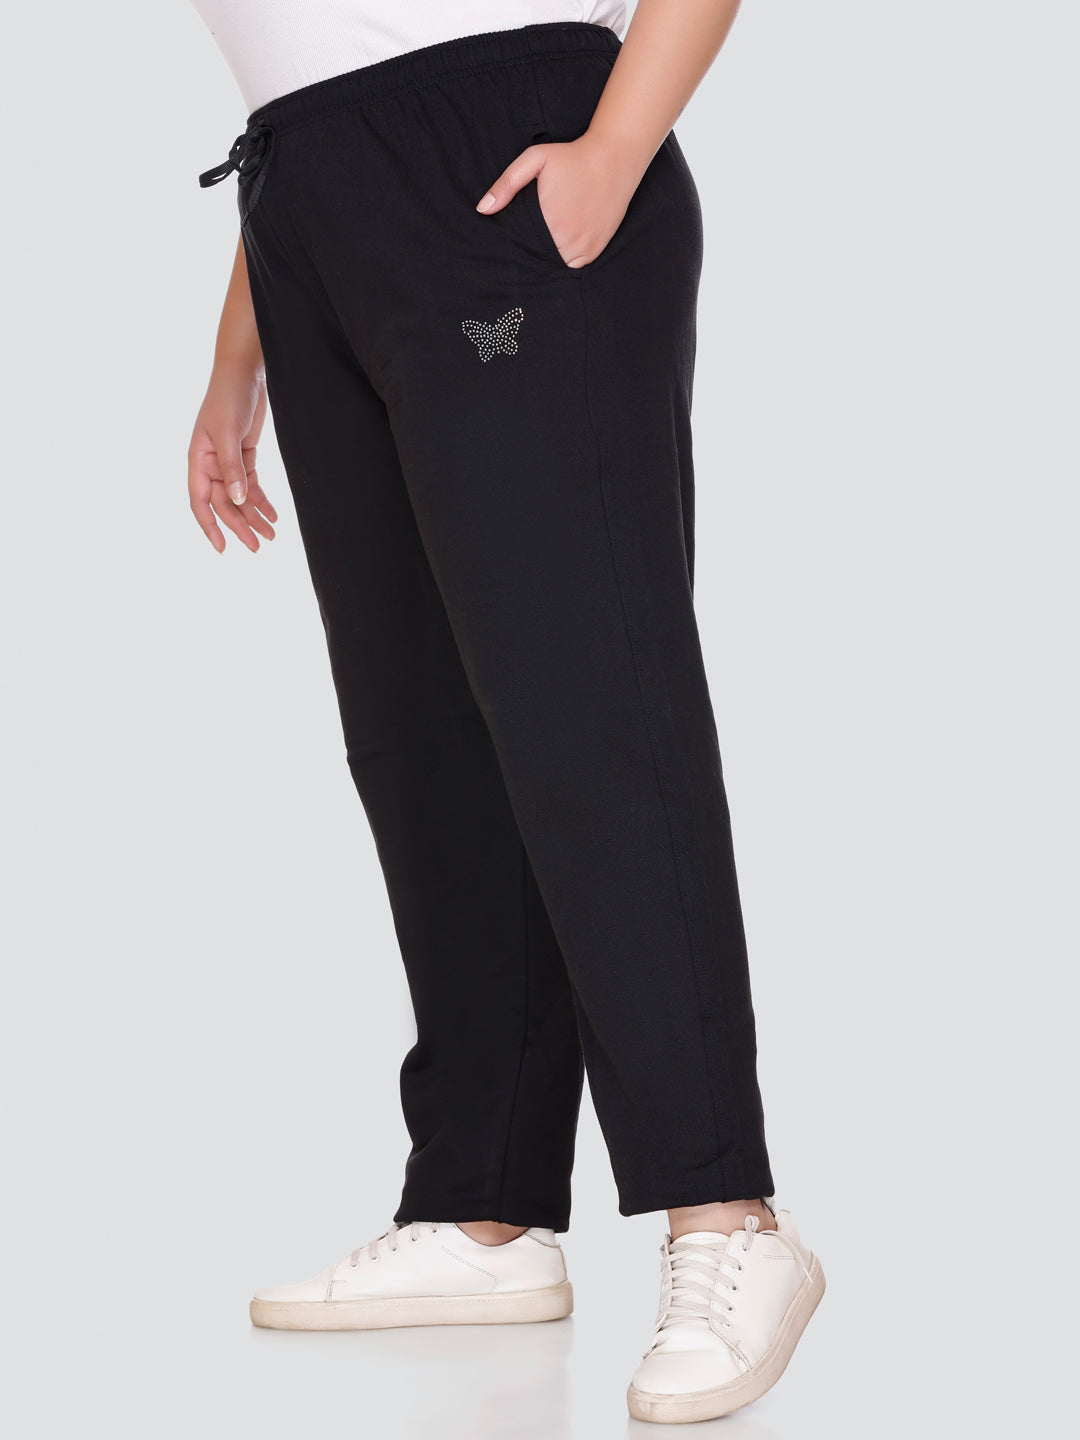 adidas Track Pants Women XS (4-6) Black Ankle Zip APU002 Pockets EUC | eBay